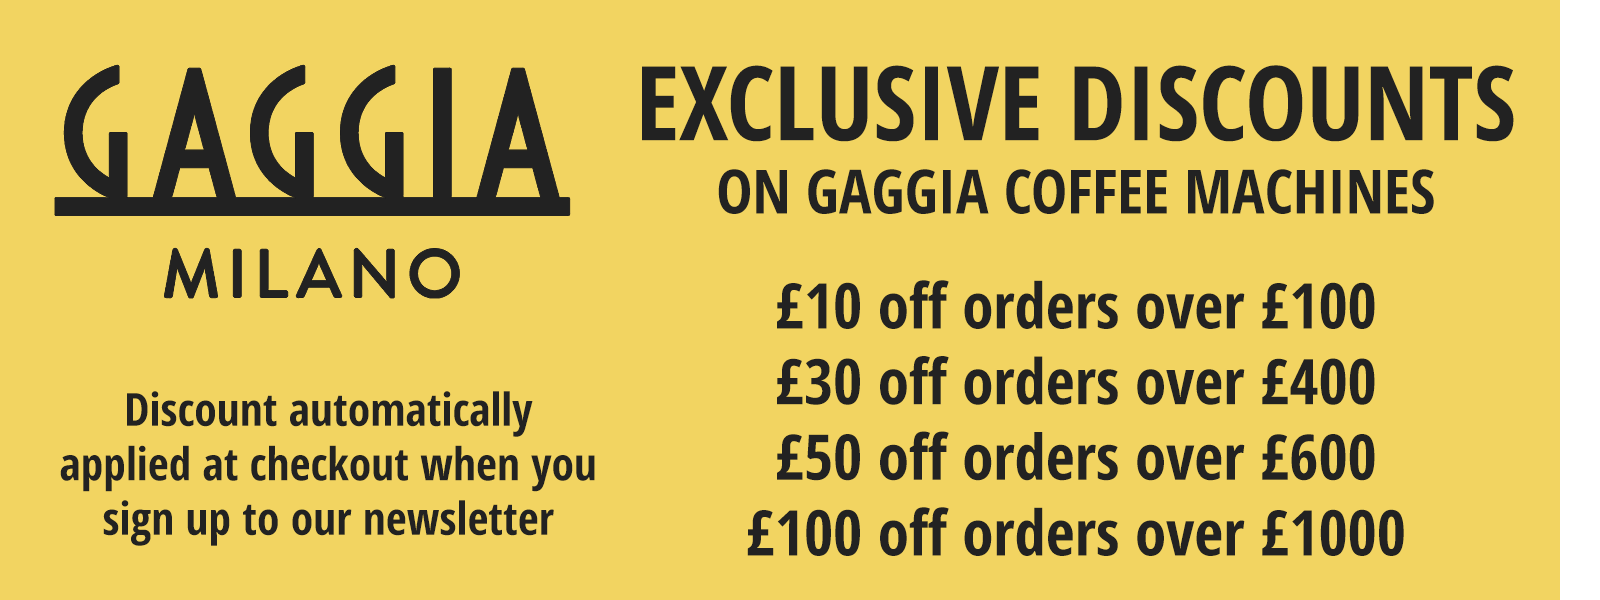 Exclusive Gaggia Discounts